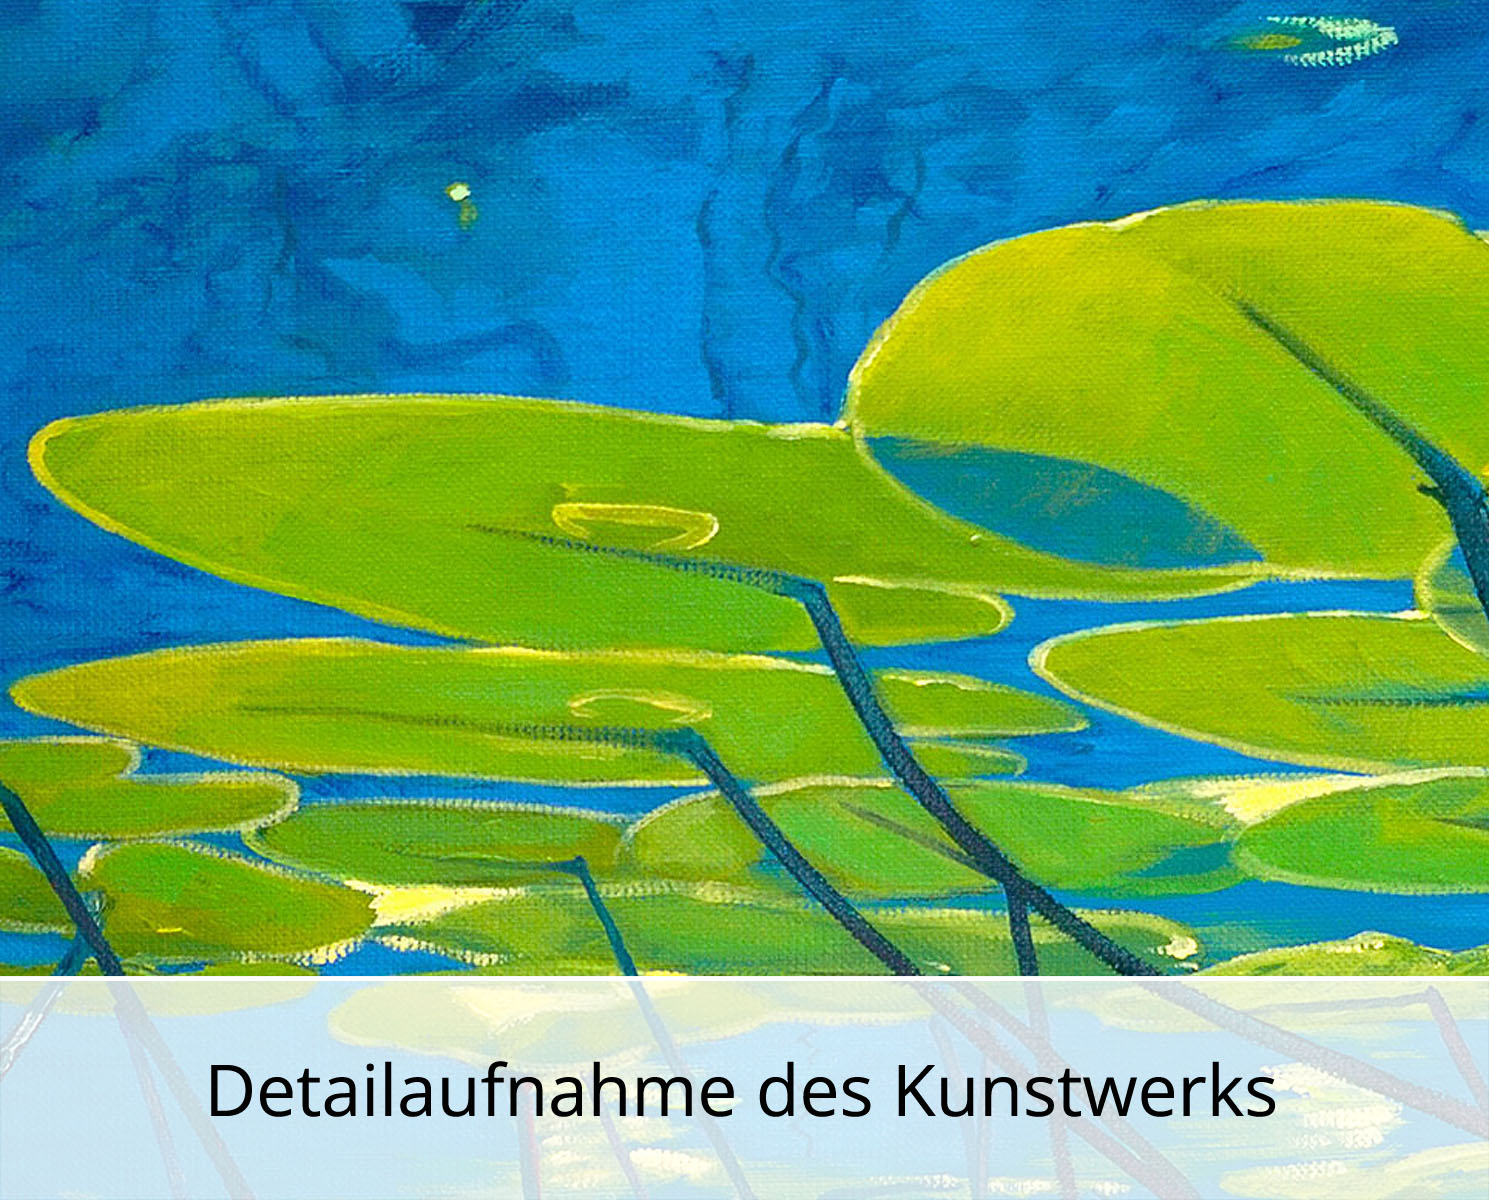 U. Fehrmann: "Seerosen V", Edition, signierter Kunstdruck auf Leinwand